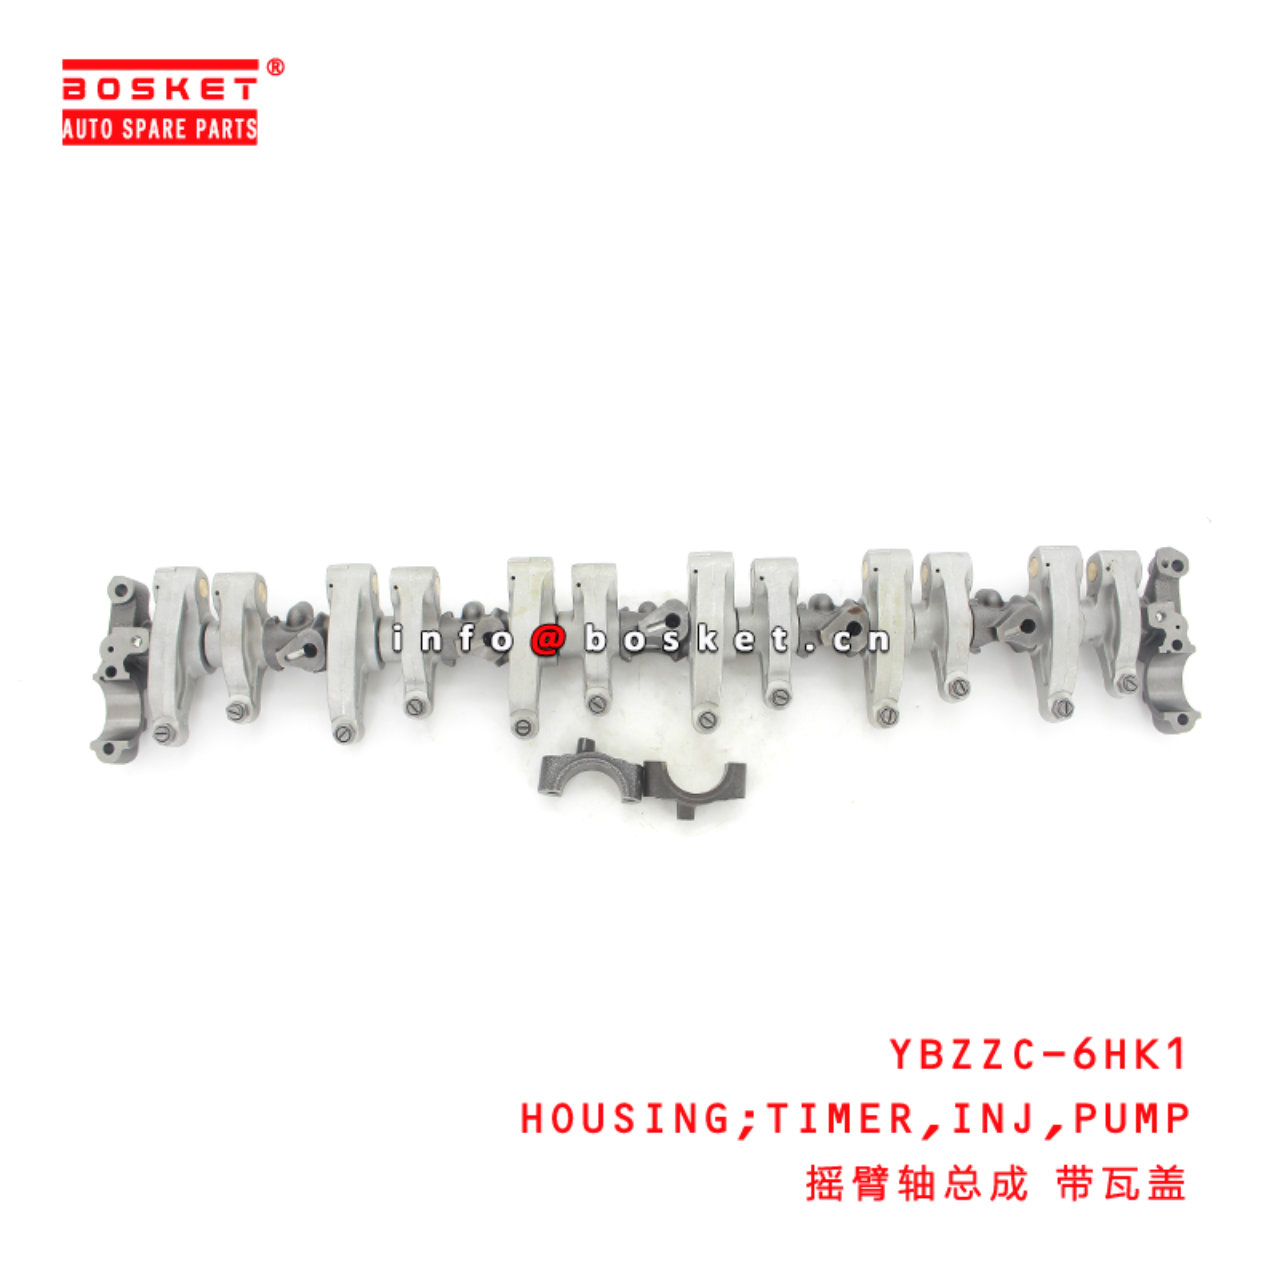 YBZZC-6HK1 Pump Injection Timer Housing Suitable for ISUZU YBZZC-6HK1